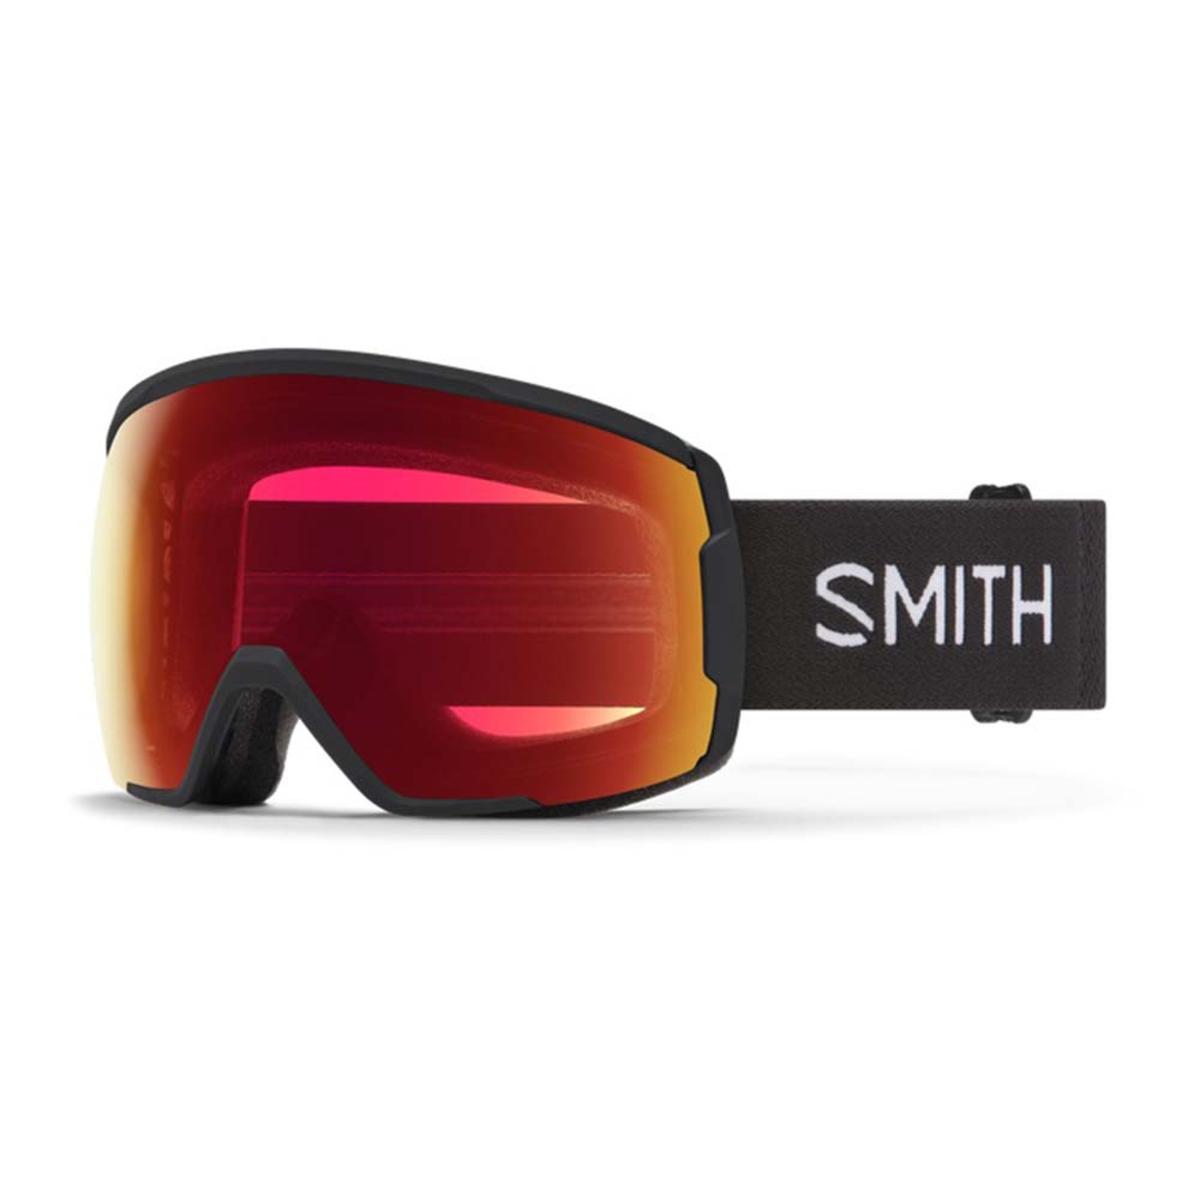 Smith Optics Proxy Goggles ChromaPop Photochromic Red Mirror - Black Frame